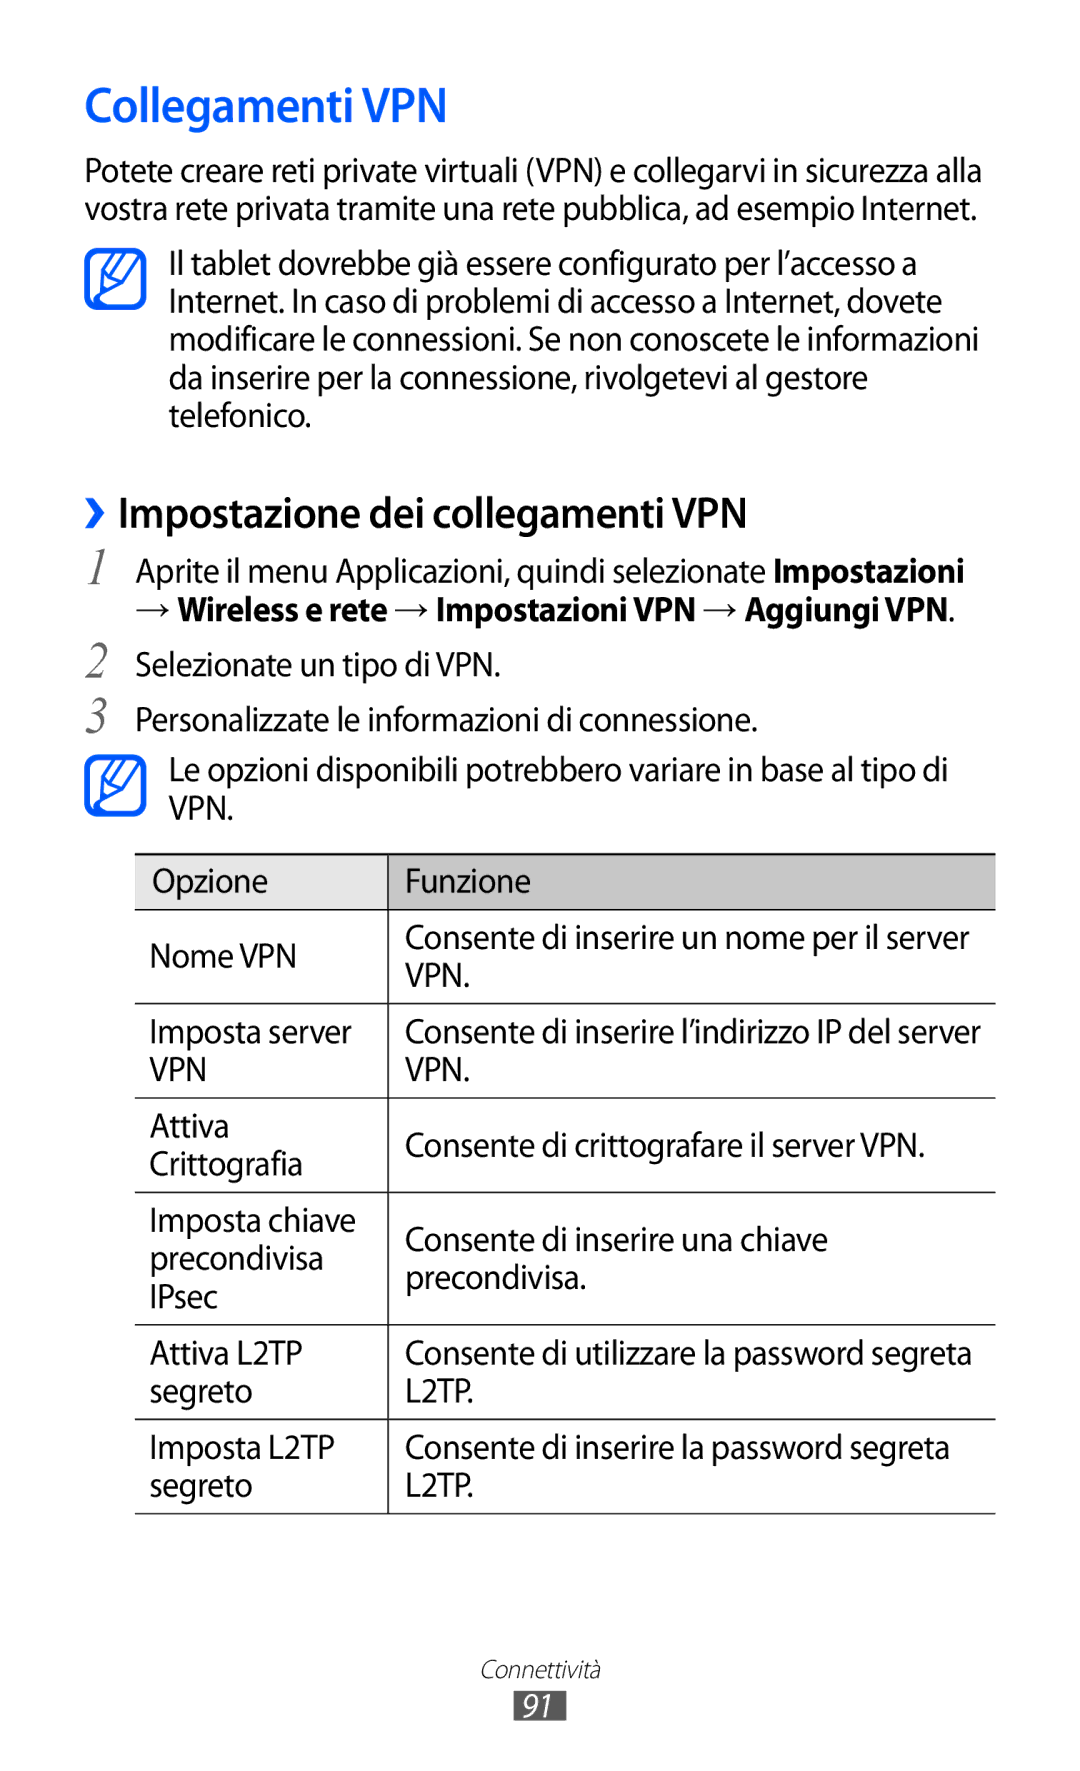 Samsung GT-P7300UWATIM, GT-P7300UWATUR, GT-P7300UWAITV, GT-P7300FKATIM Collegamenti VPN, ››Impostazione dei collegamenti VPN 